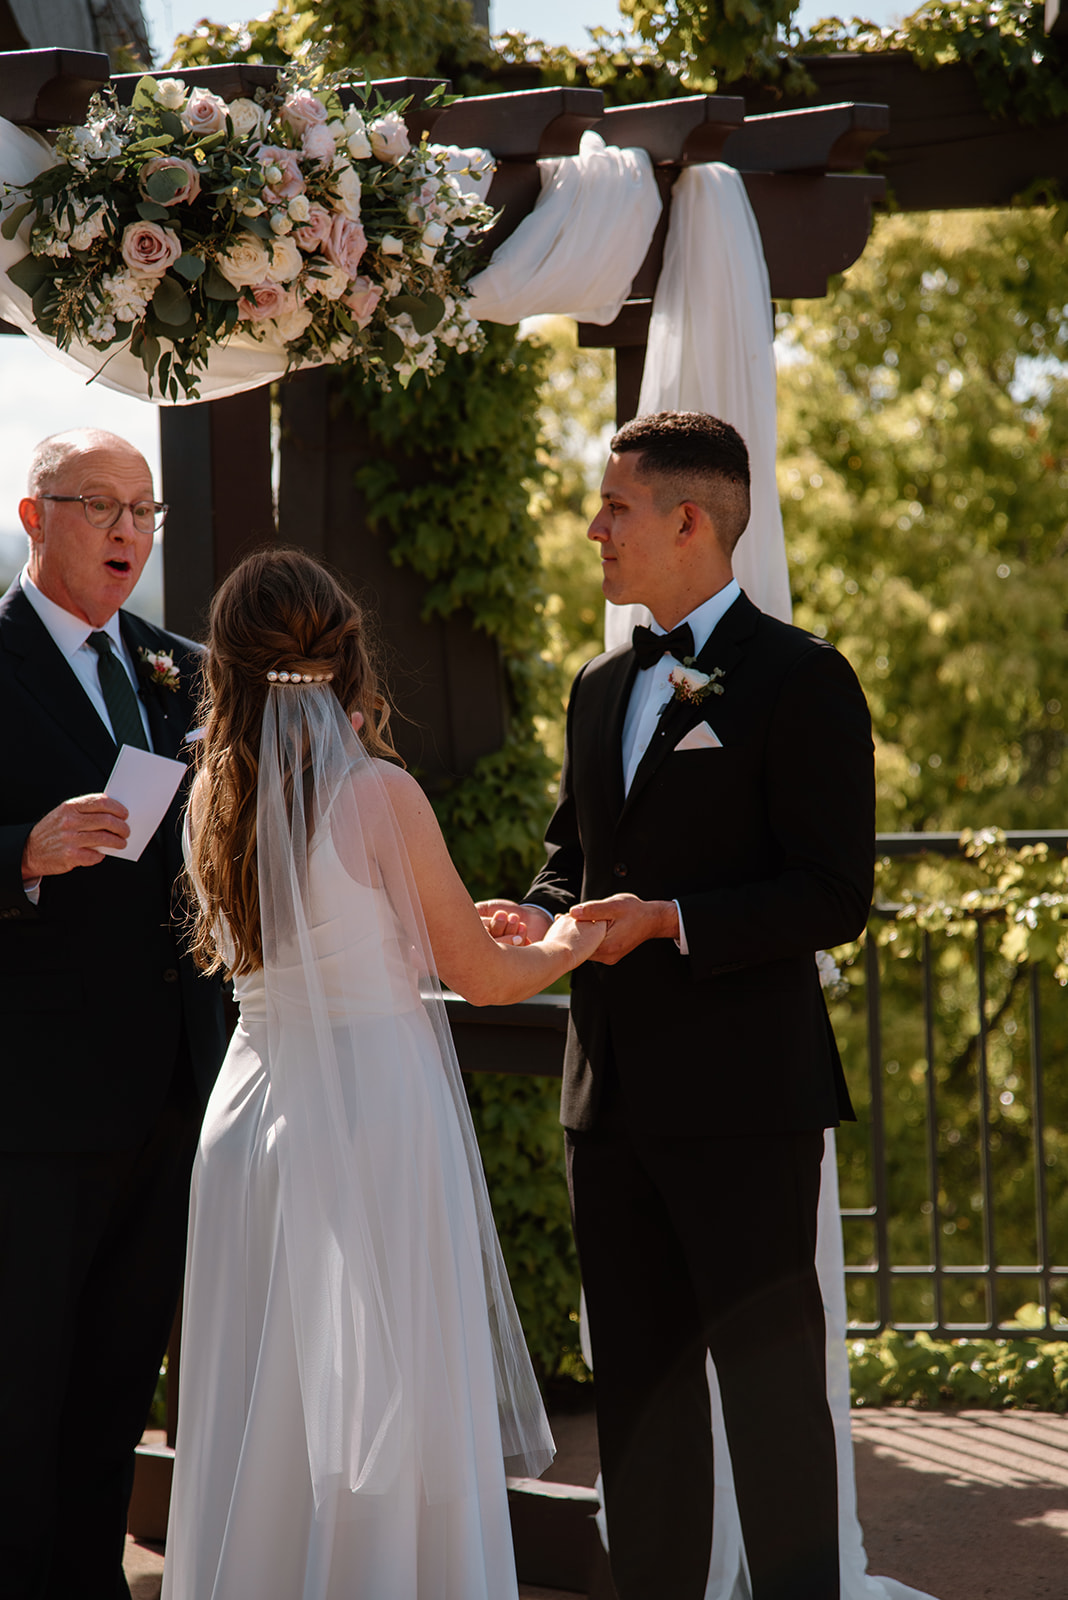 Sydney Jai Photography - Winery wedding, wedding ceremony, wedding vs elopement